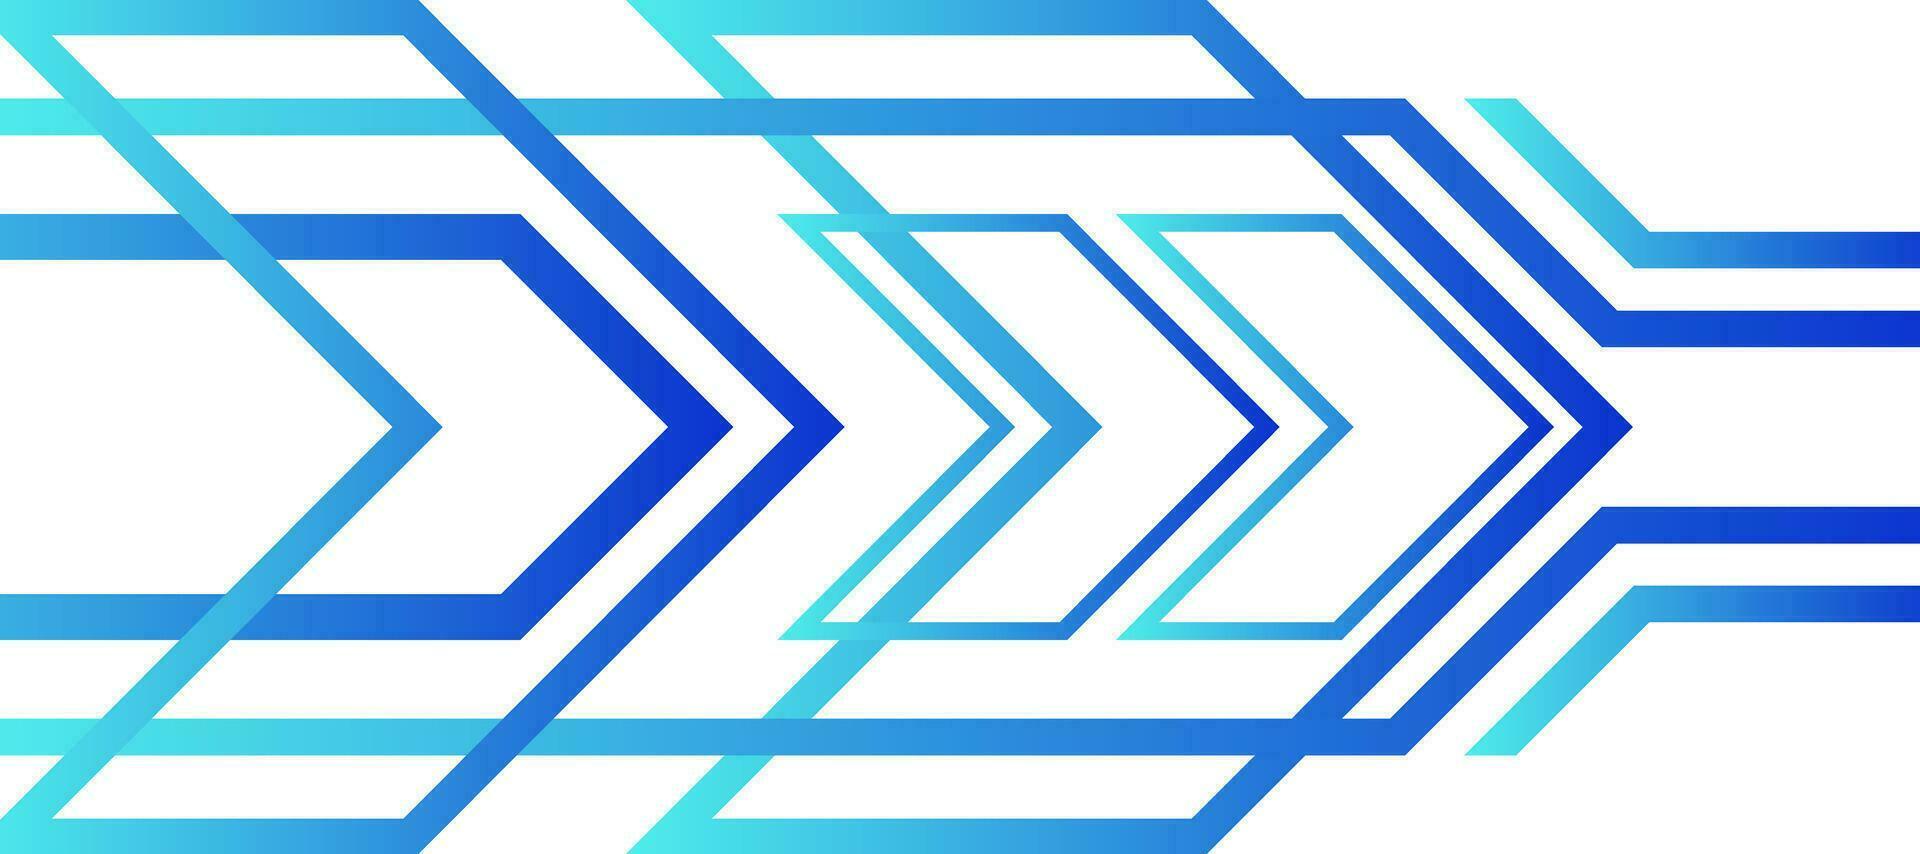 tech pijl blauw schets lijnen helling futuristische achtergrond vector